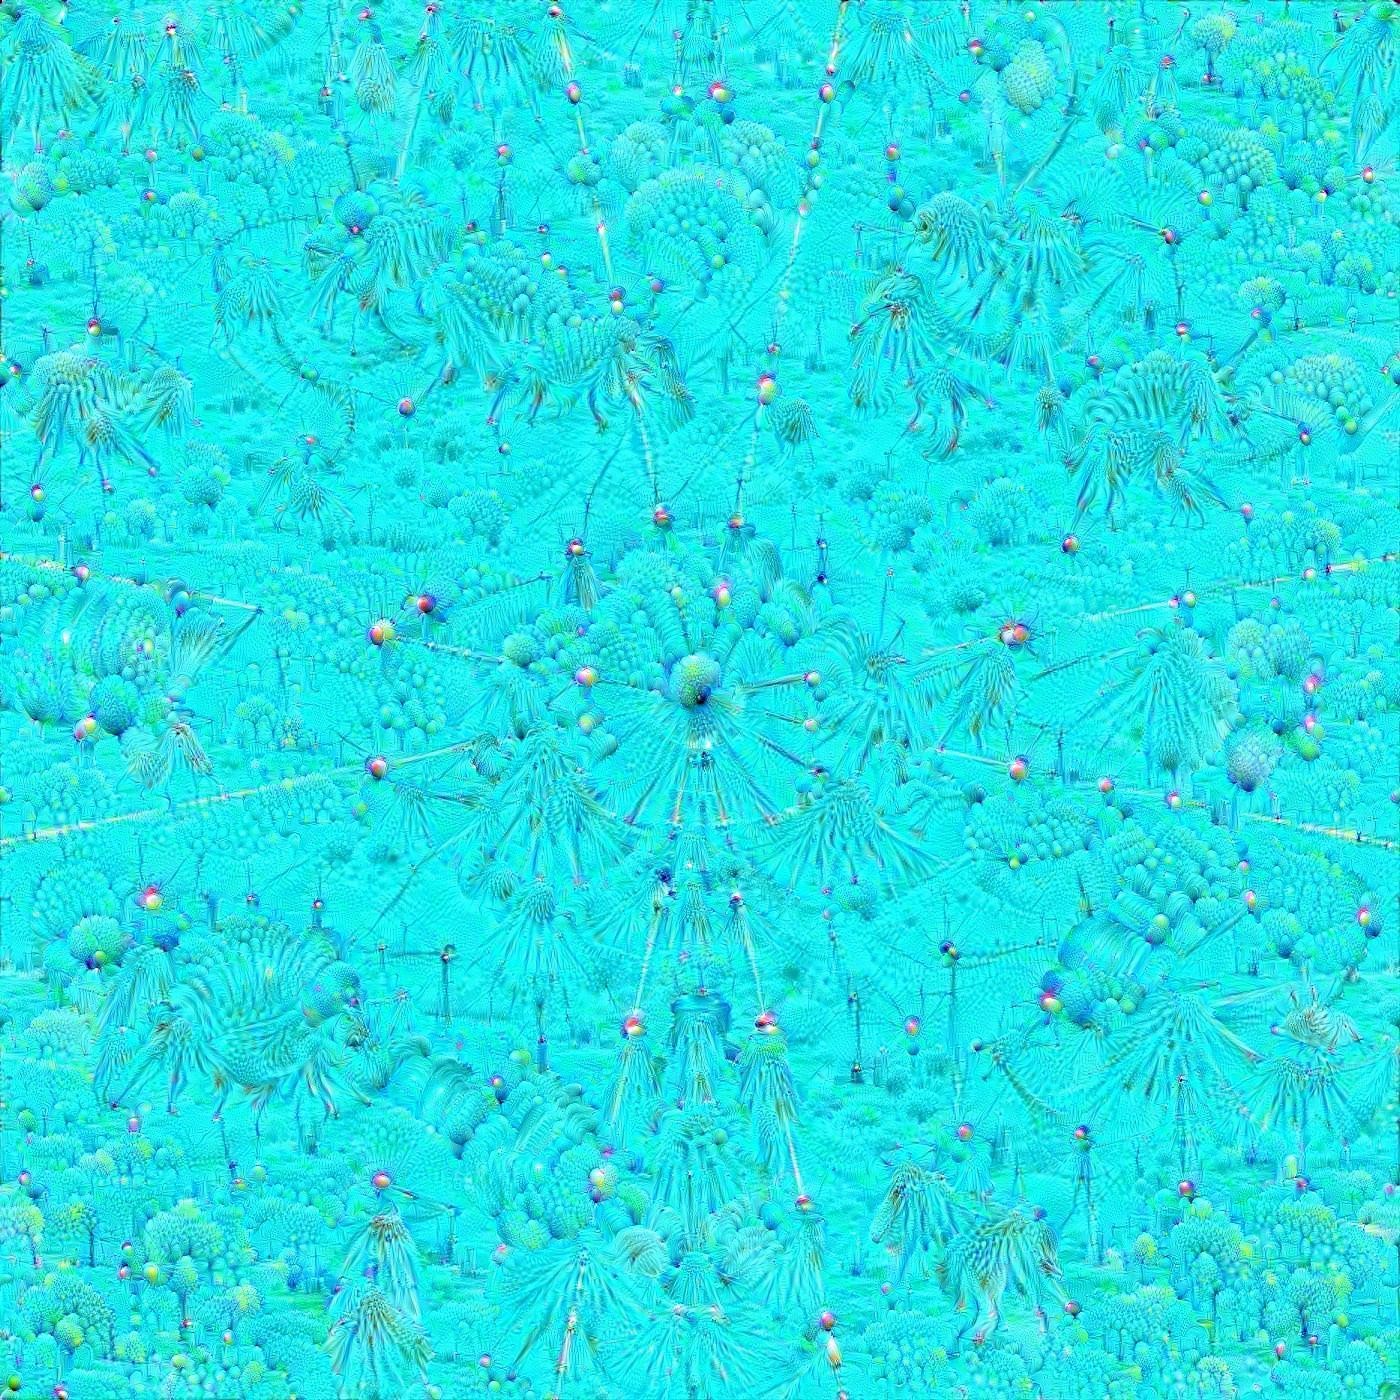 Steel floor plate mirrored layered 4888 x 4888 (Neuron, Medium res, Deep)